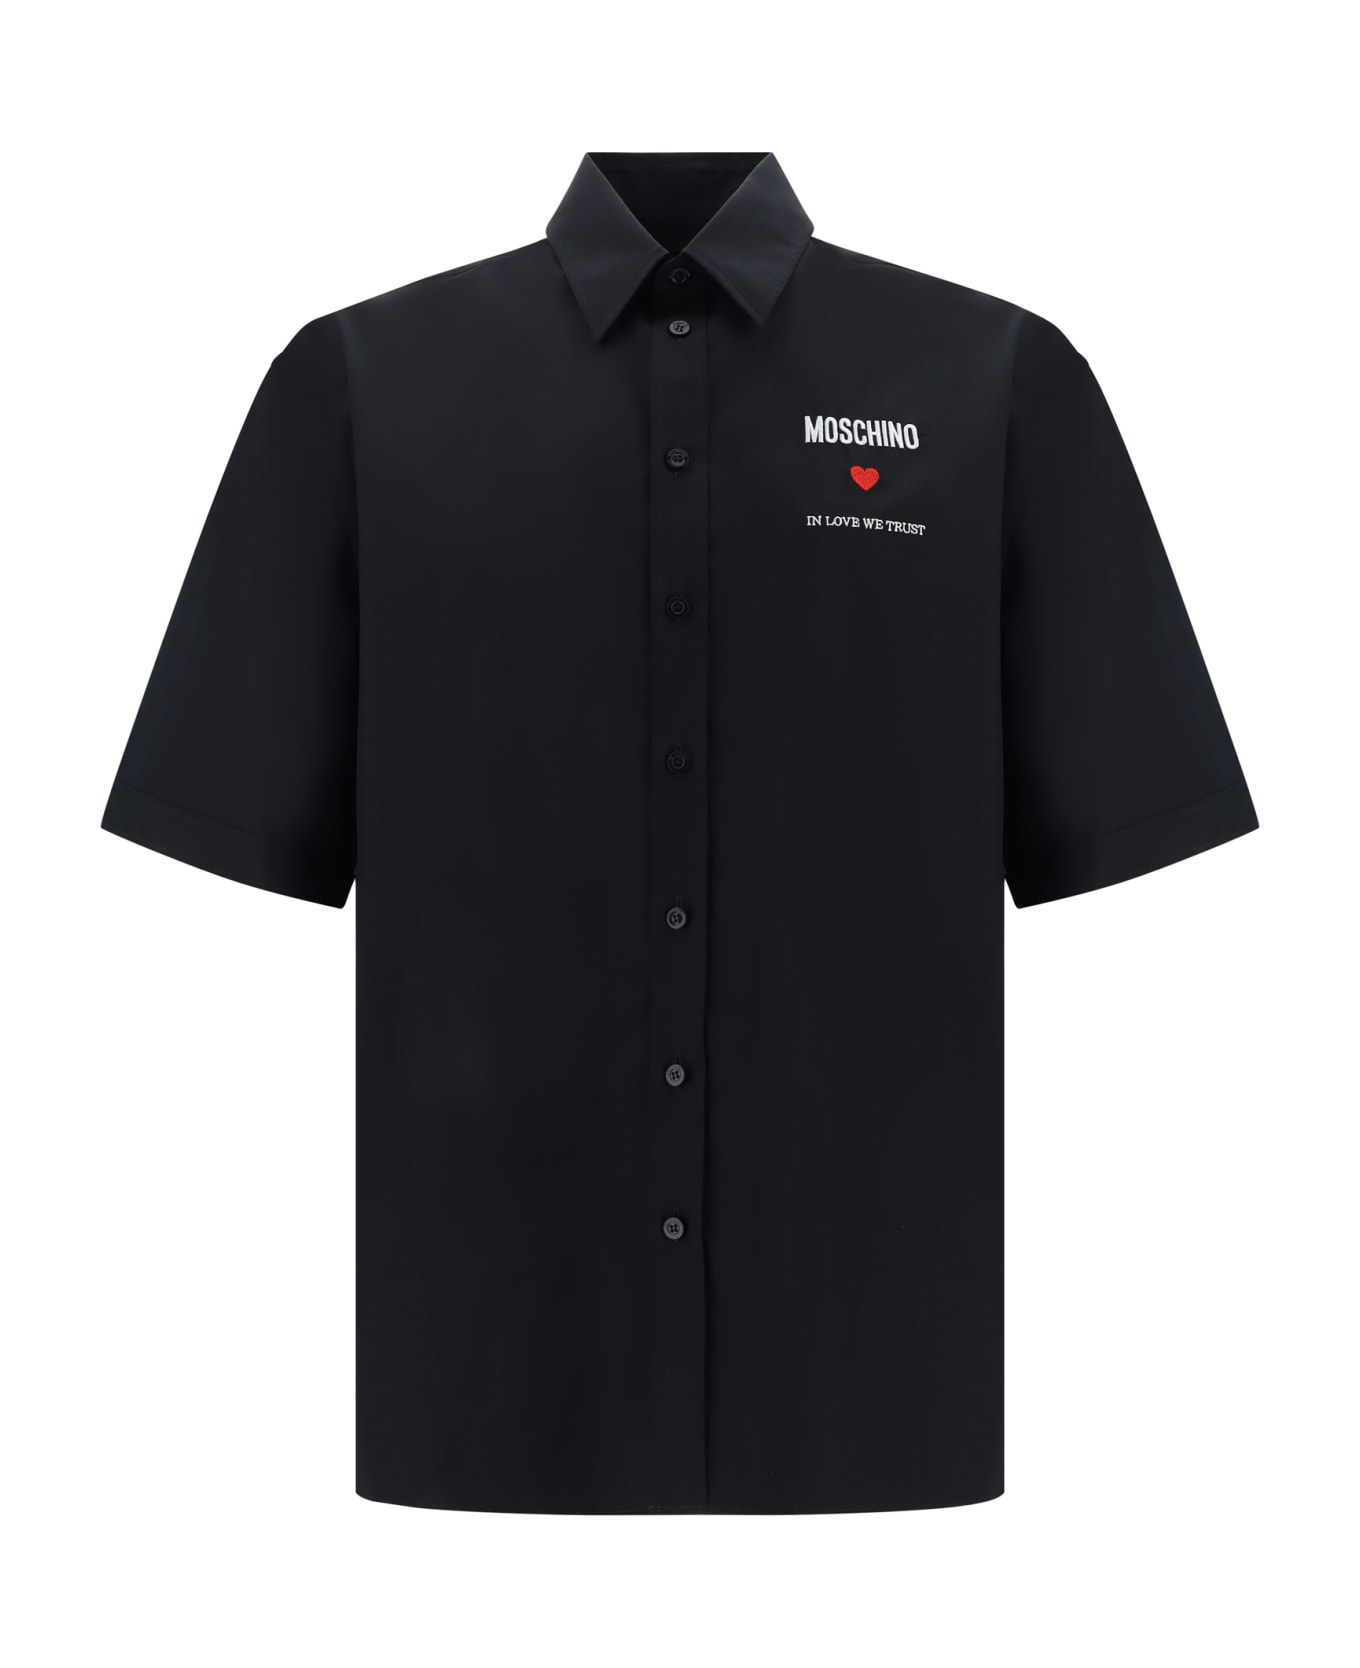 Moschino Shirt - A1555